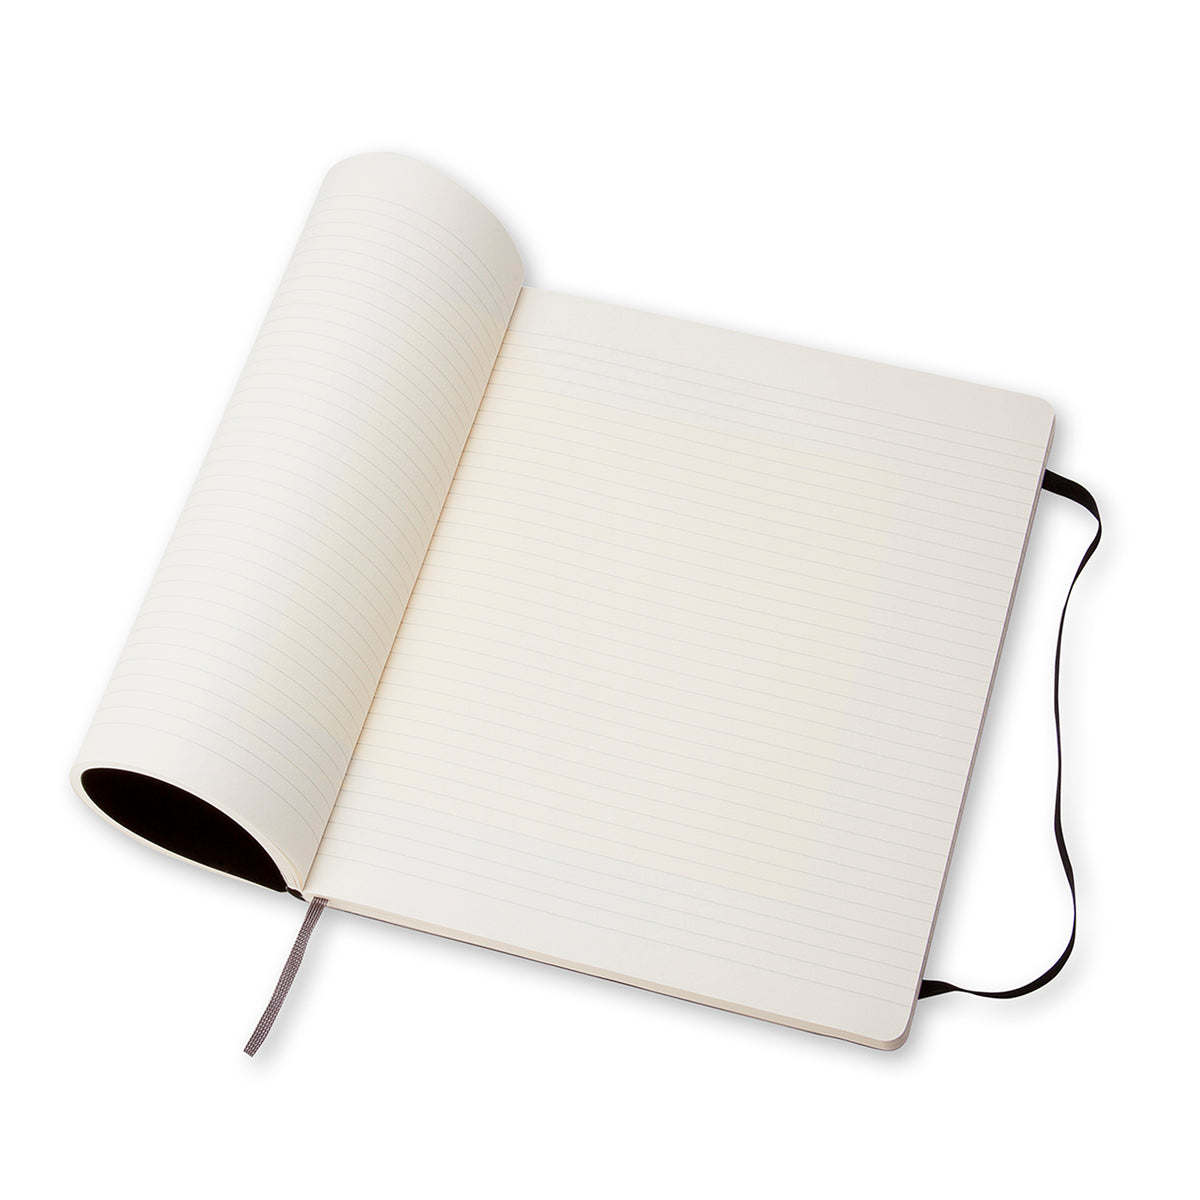 Moleskine - Classic Soft Cover Notebook - Ruled - Extra Large - Black